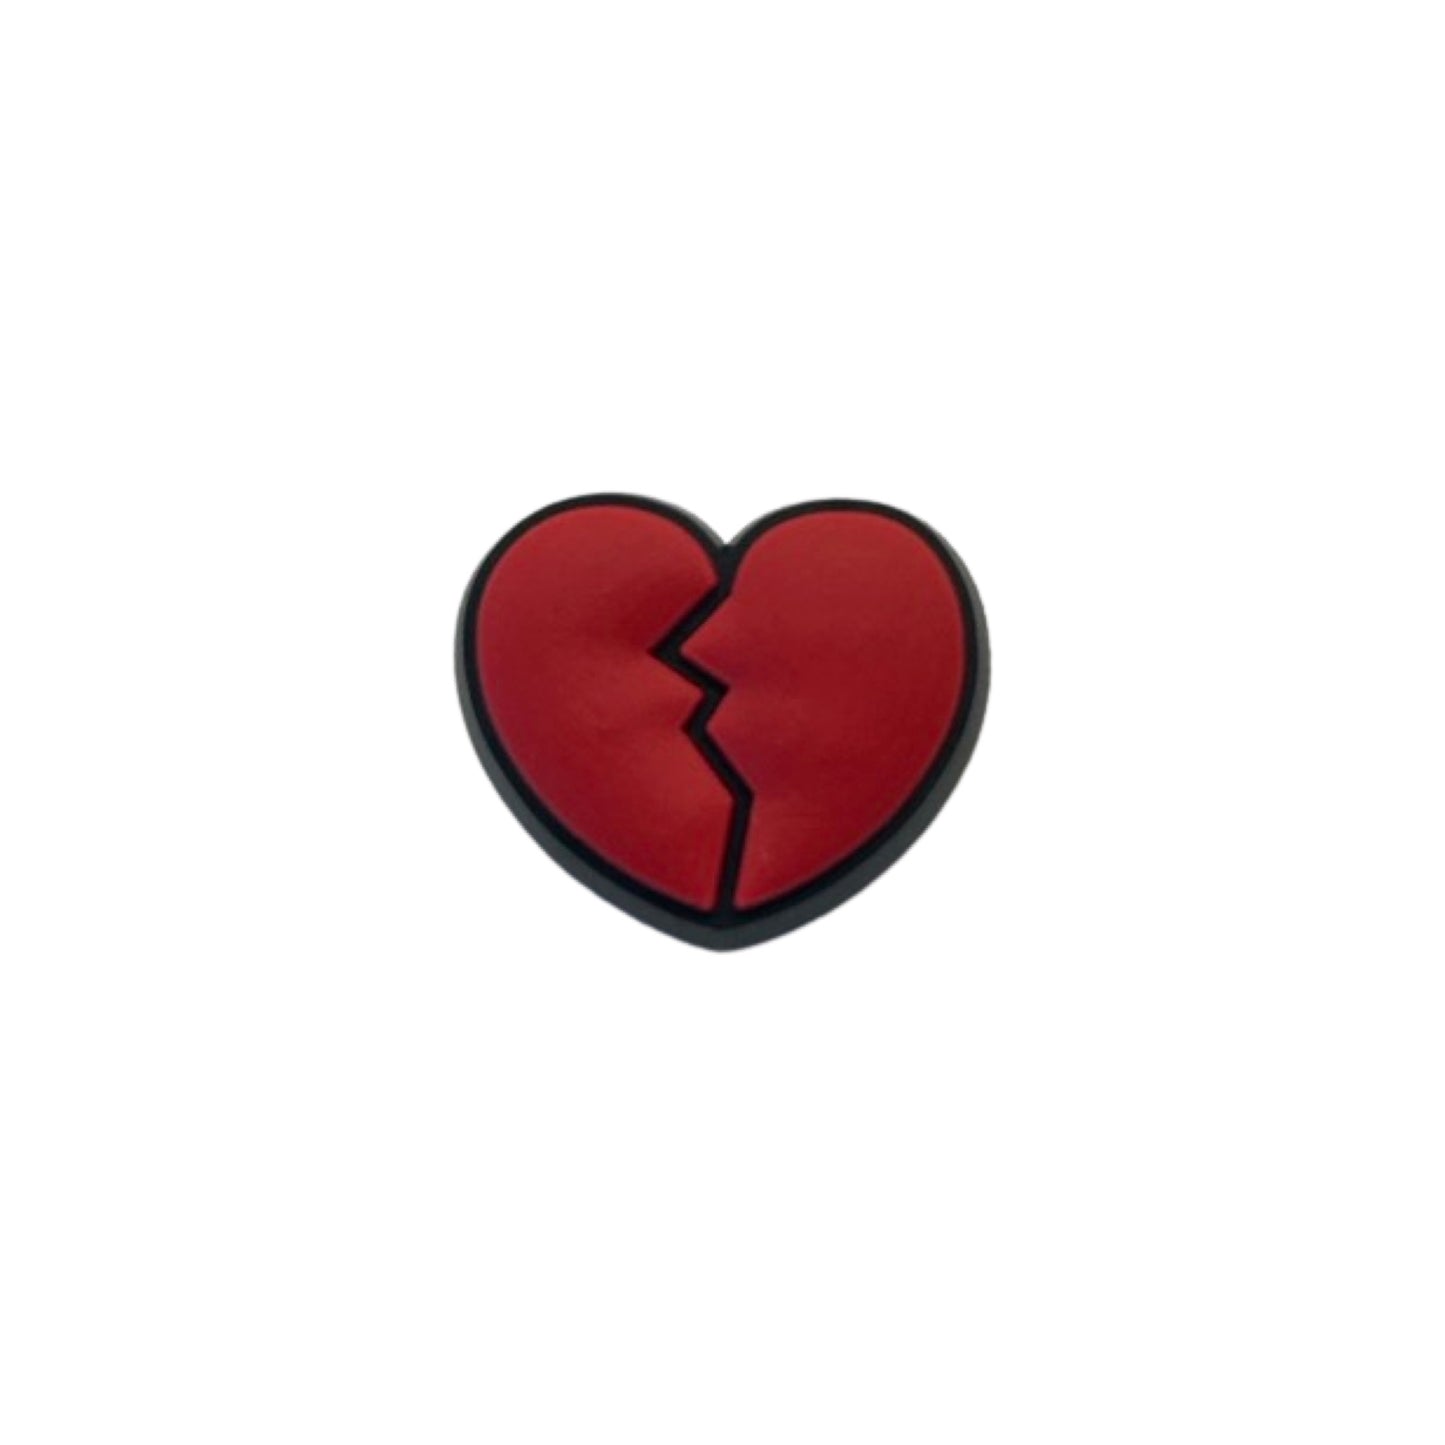 Bling Charm - ARROW HEART